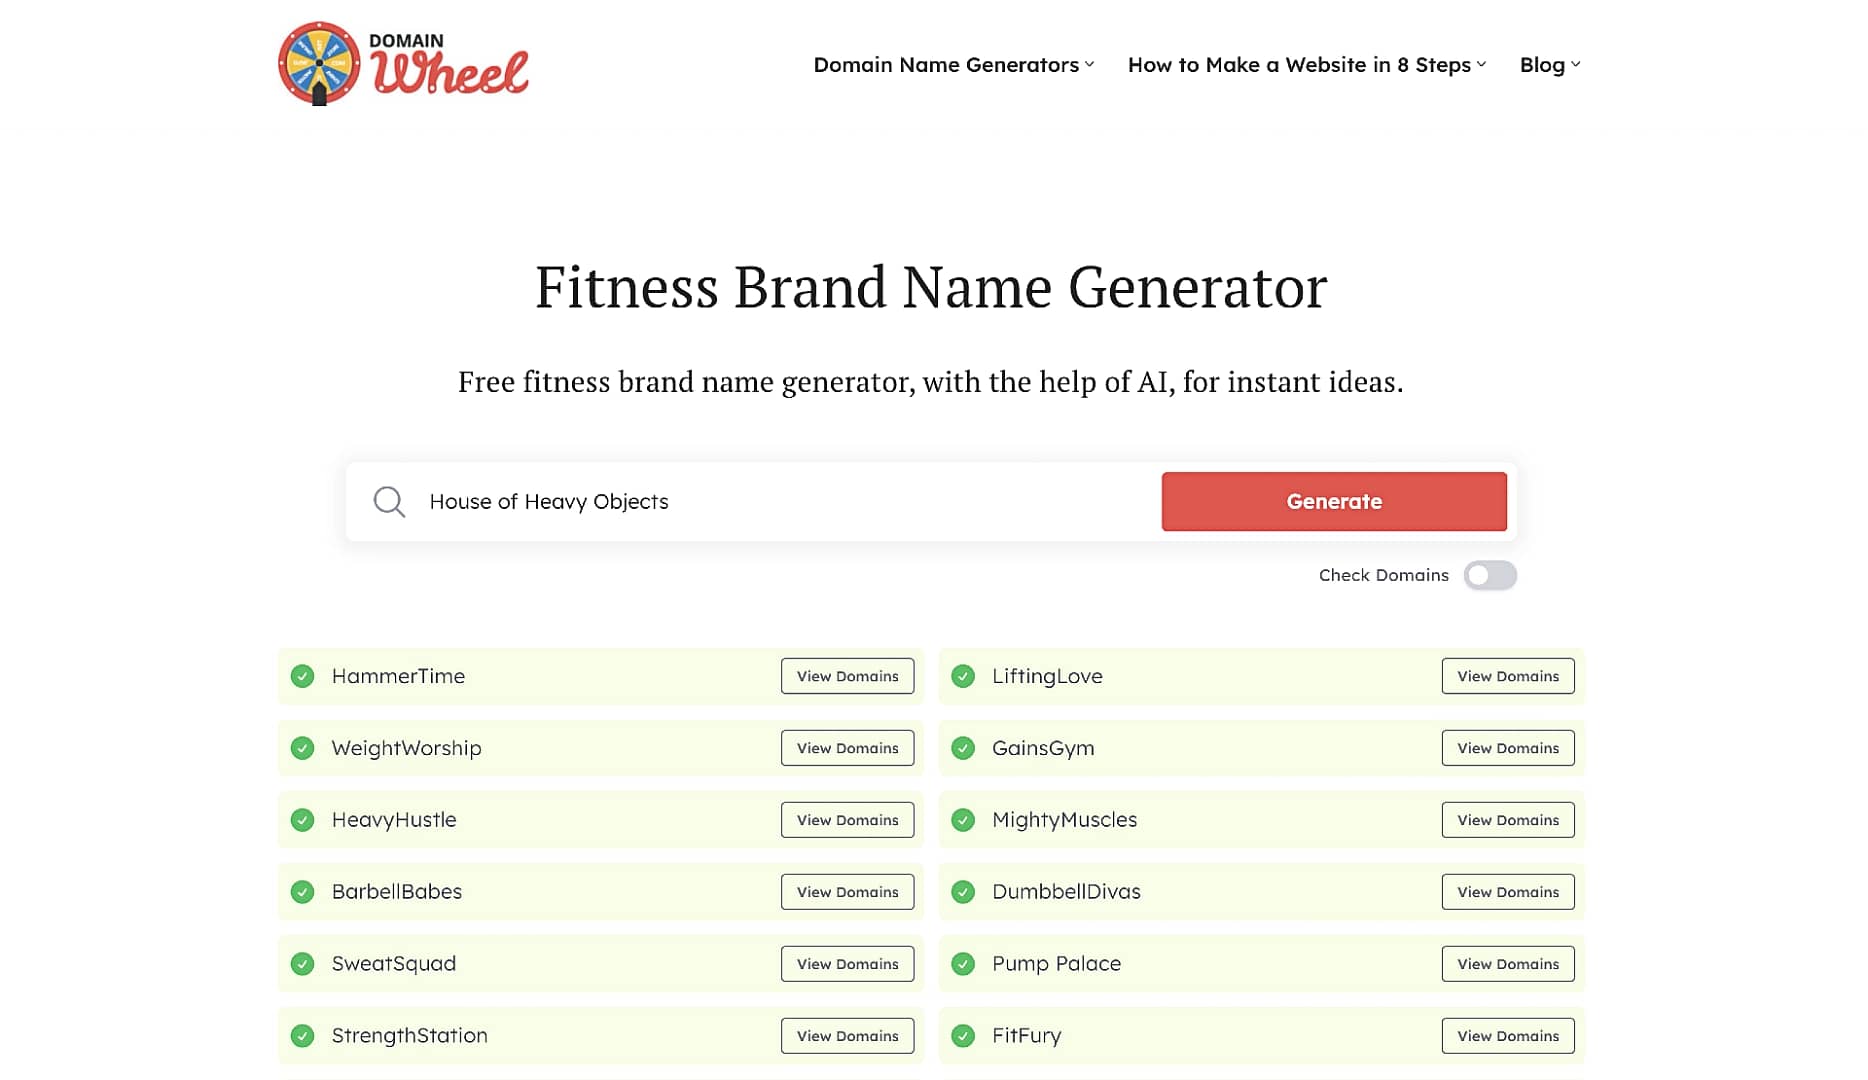 The fitness brand name generator.